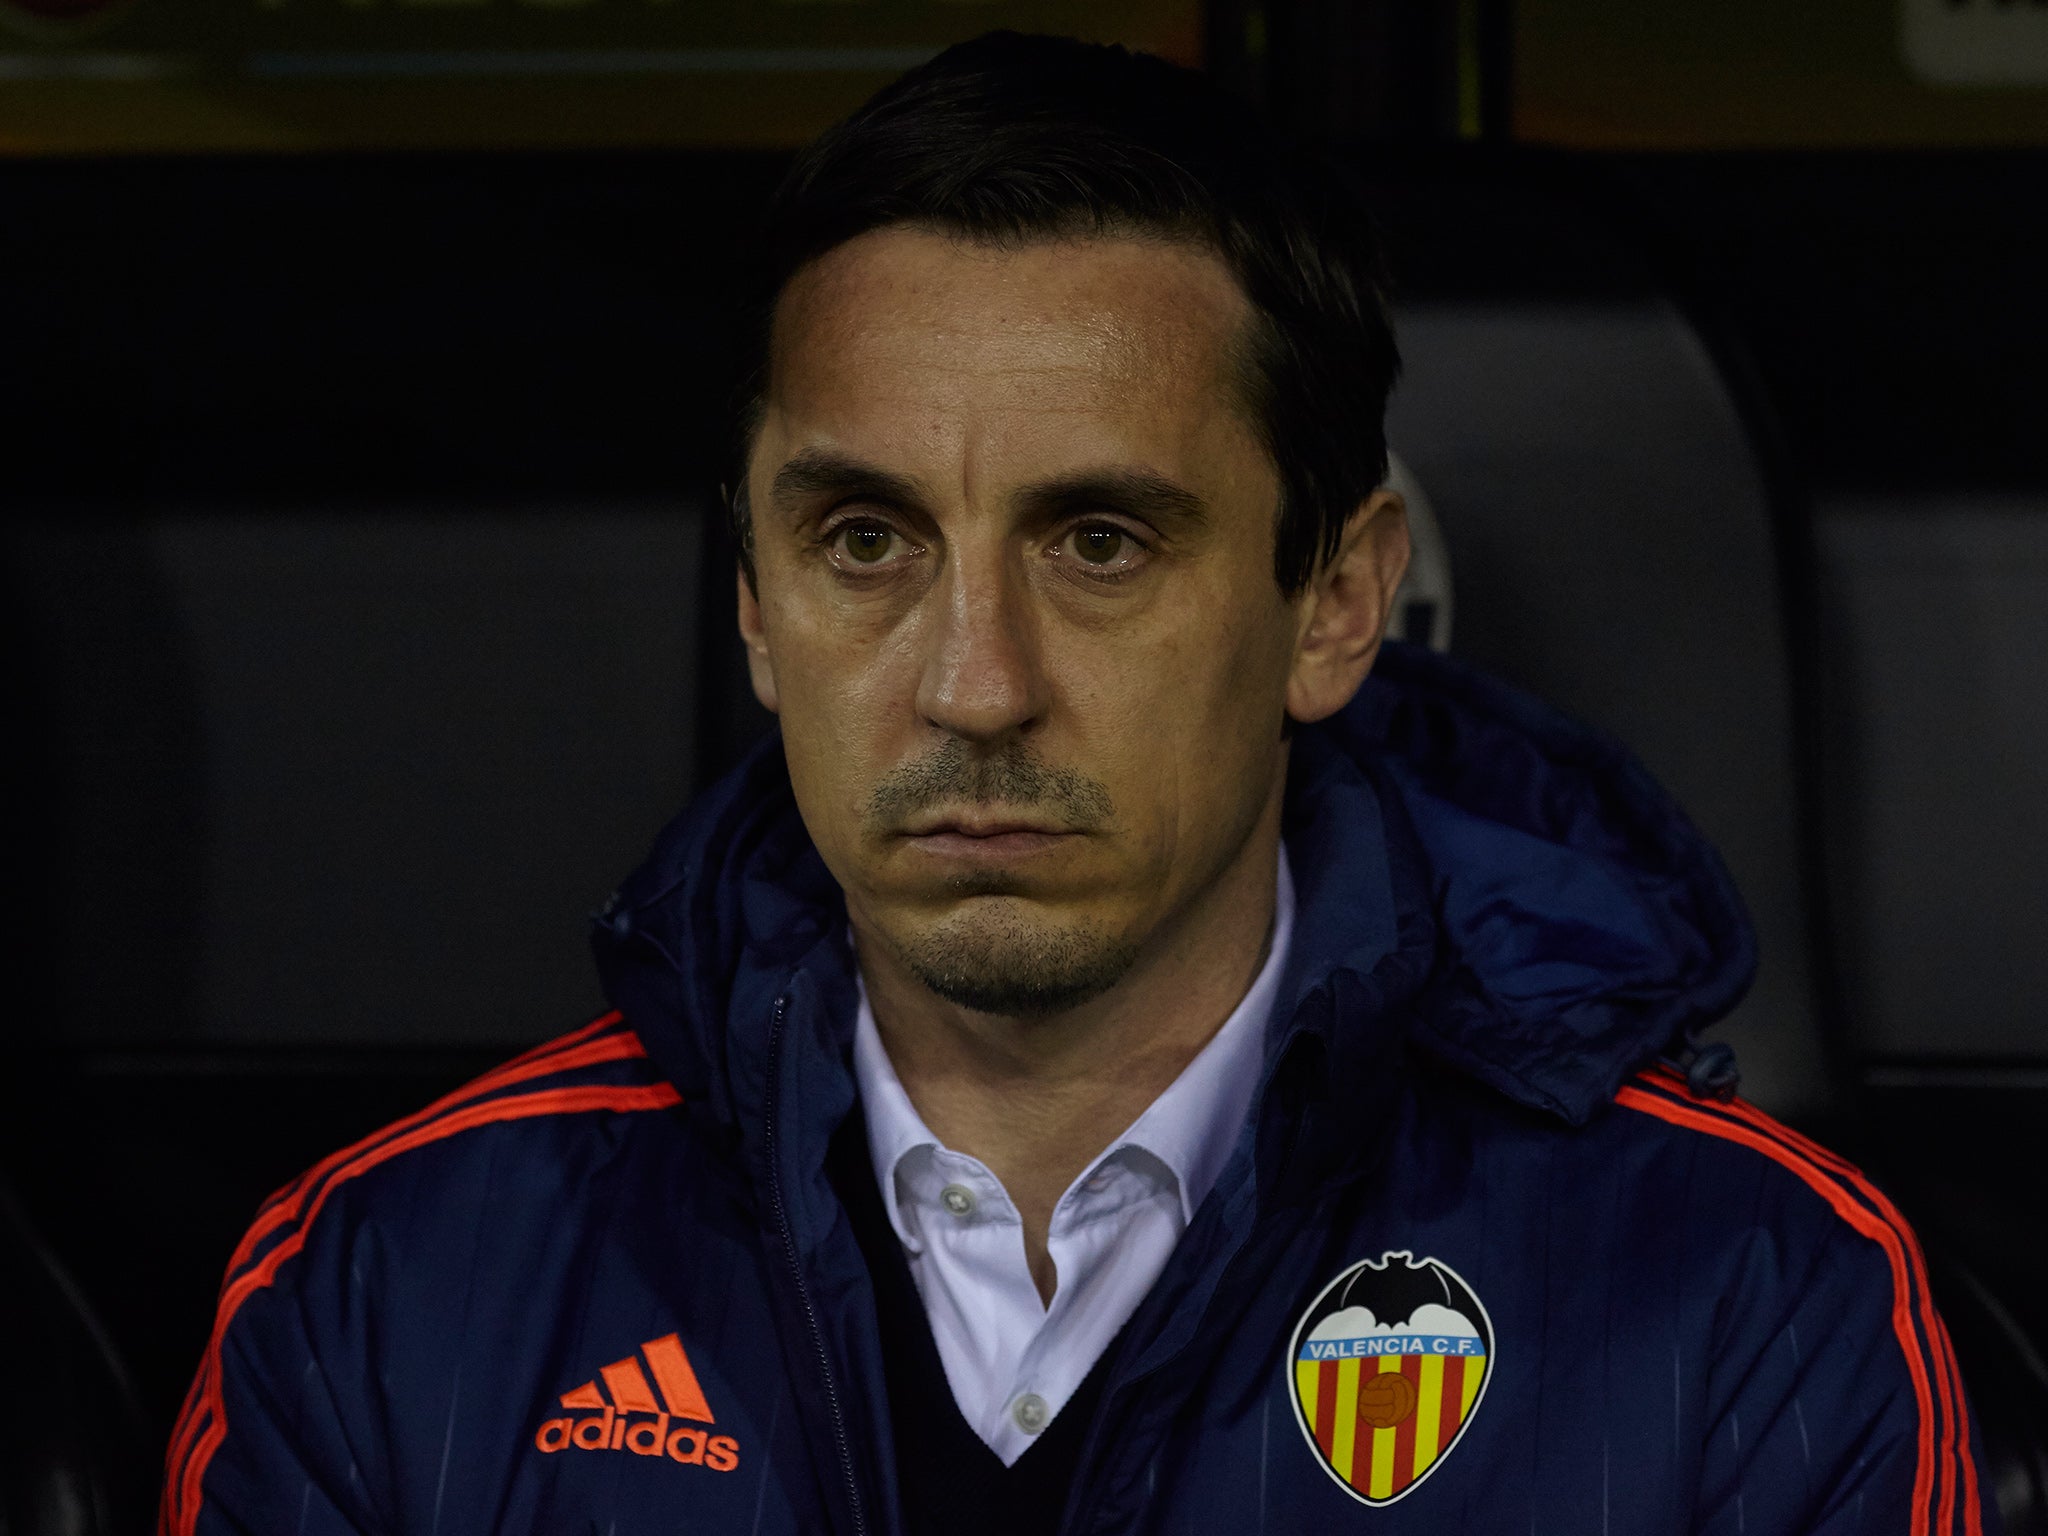 Valencia manager Gary Neville